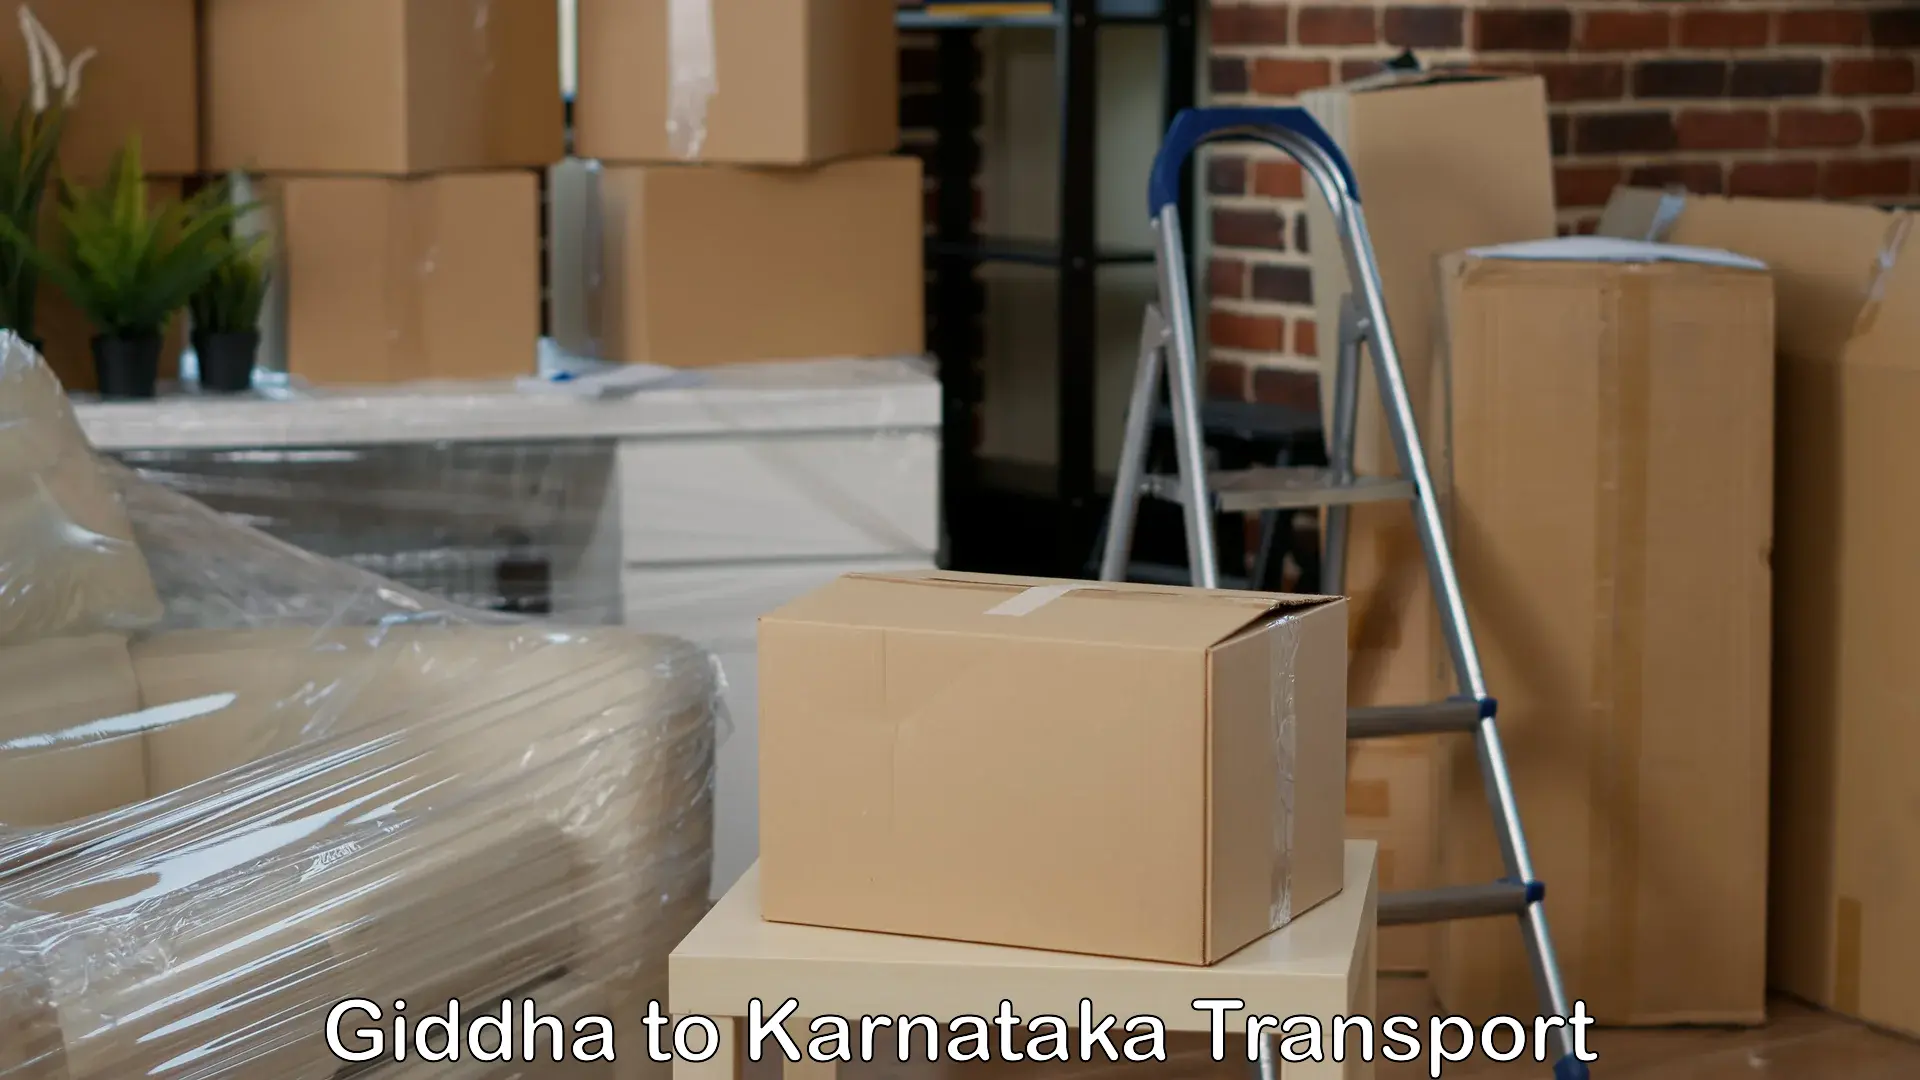 Truck transport companies in India Giddha to Sedam